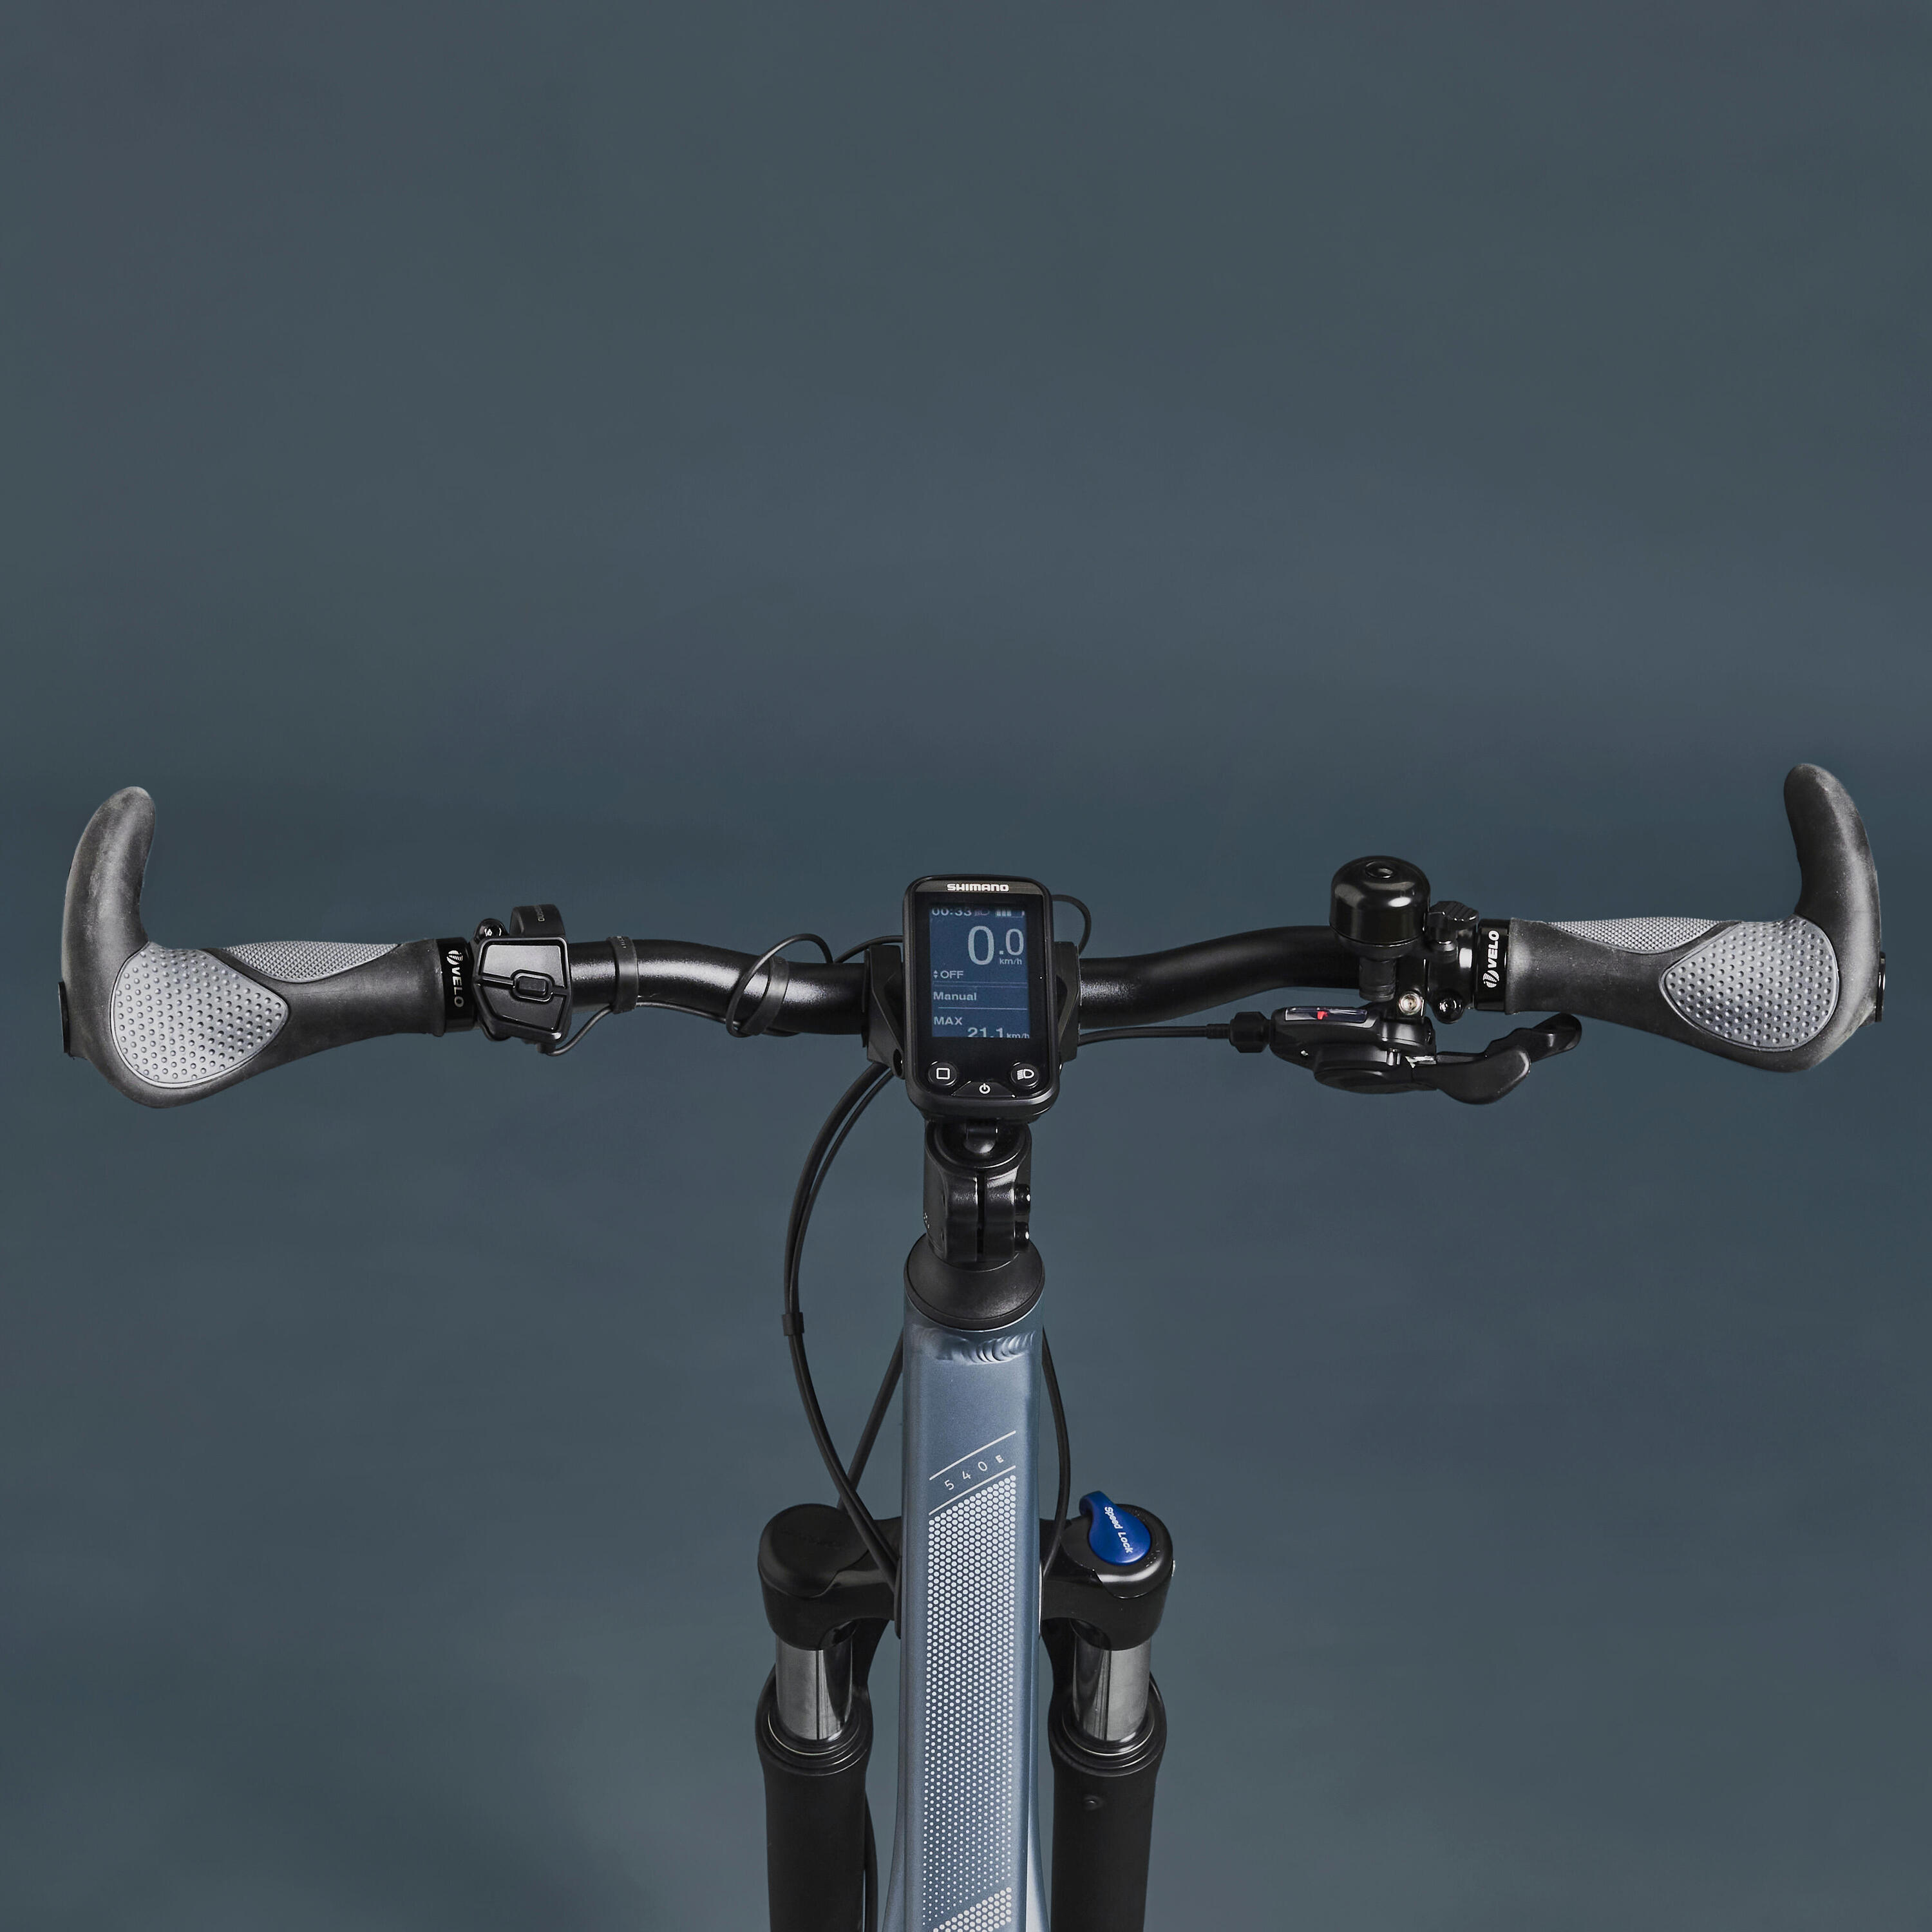 Shimano 60 Nm motor, long-distance electric hybrid bike, blue 7/20